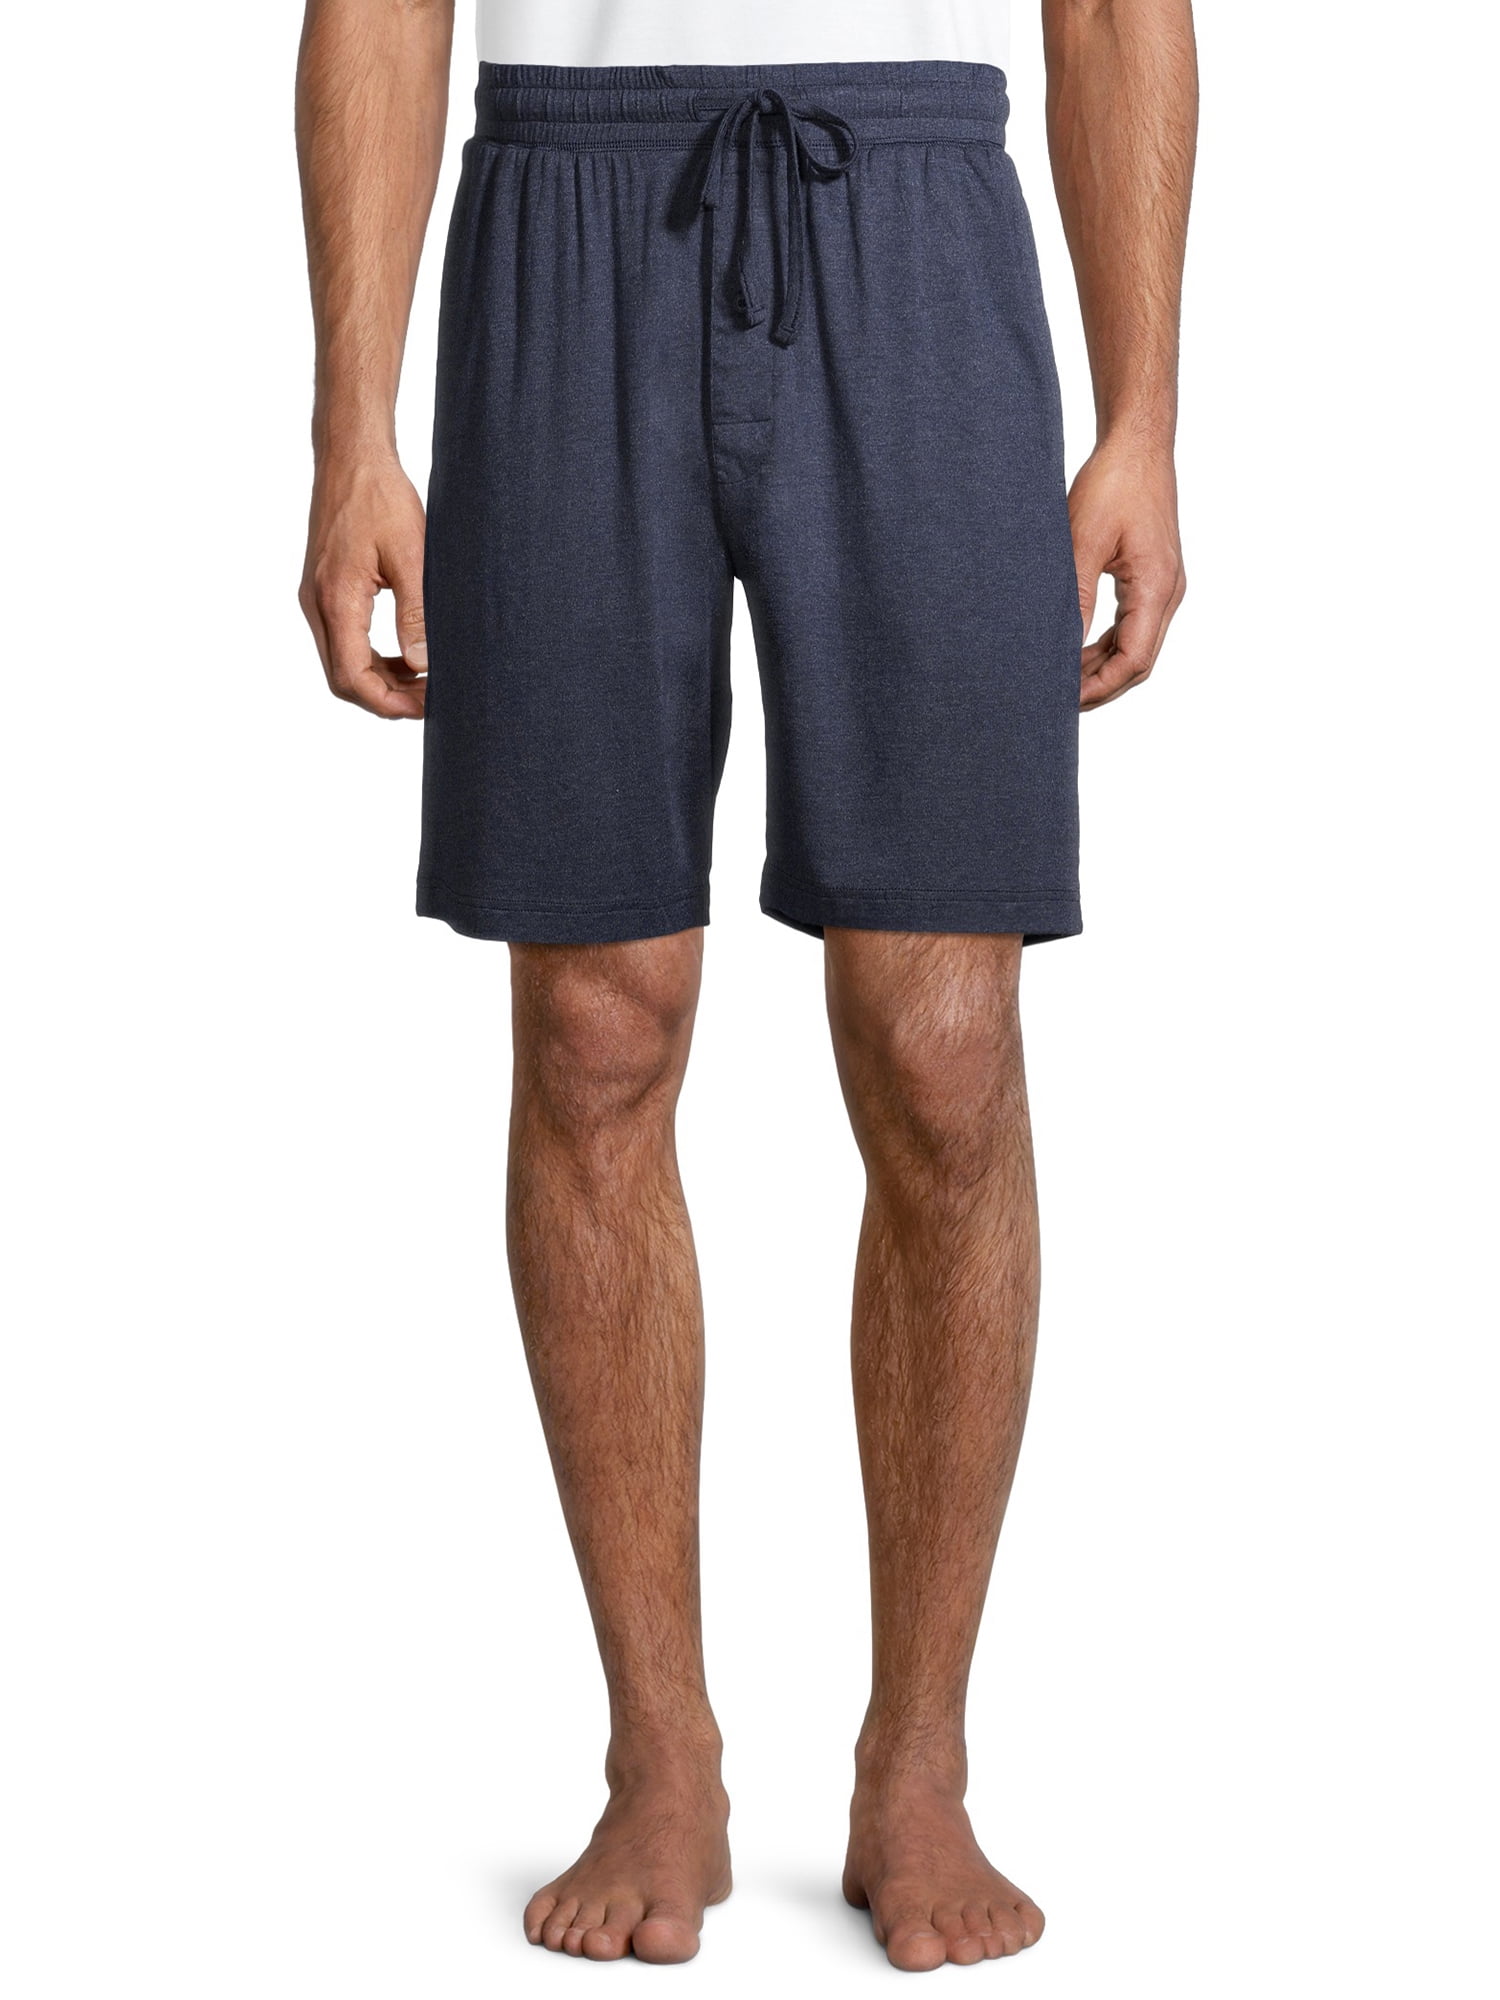 Hanes Men's Ultrasoft Modal Stretch Cozy Pajama Shorts 